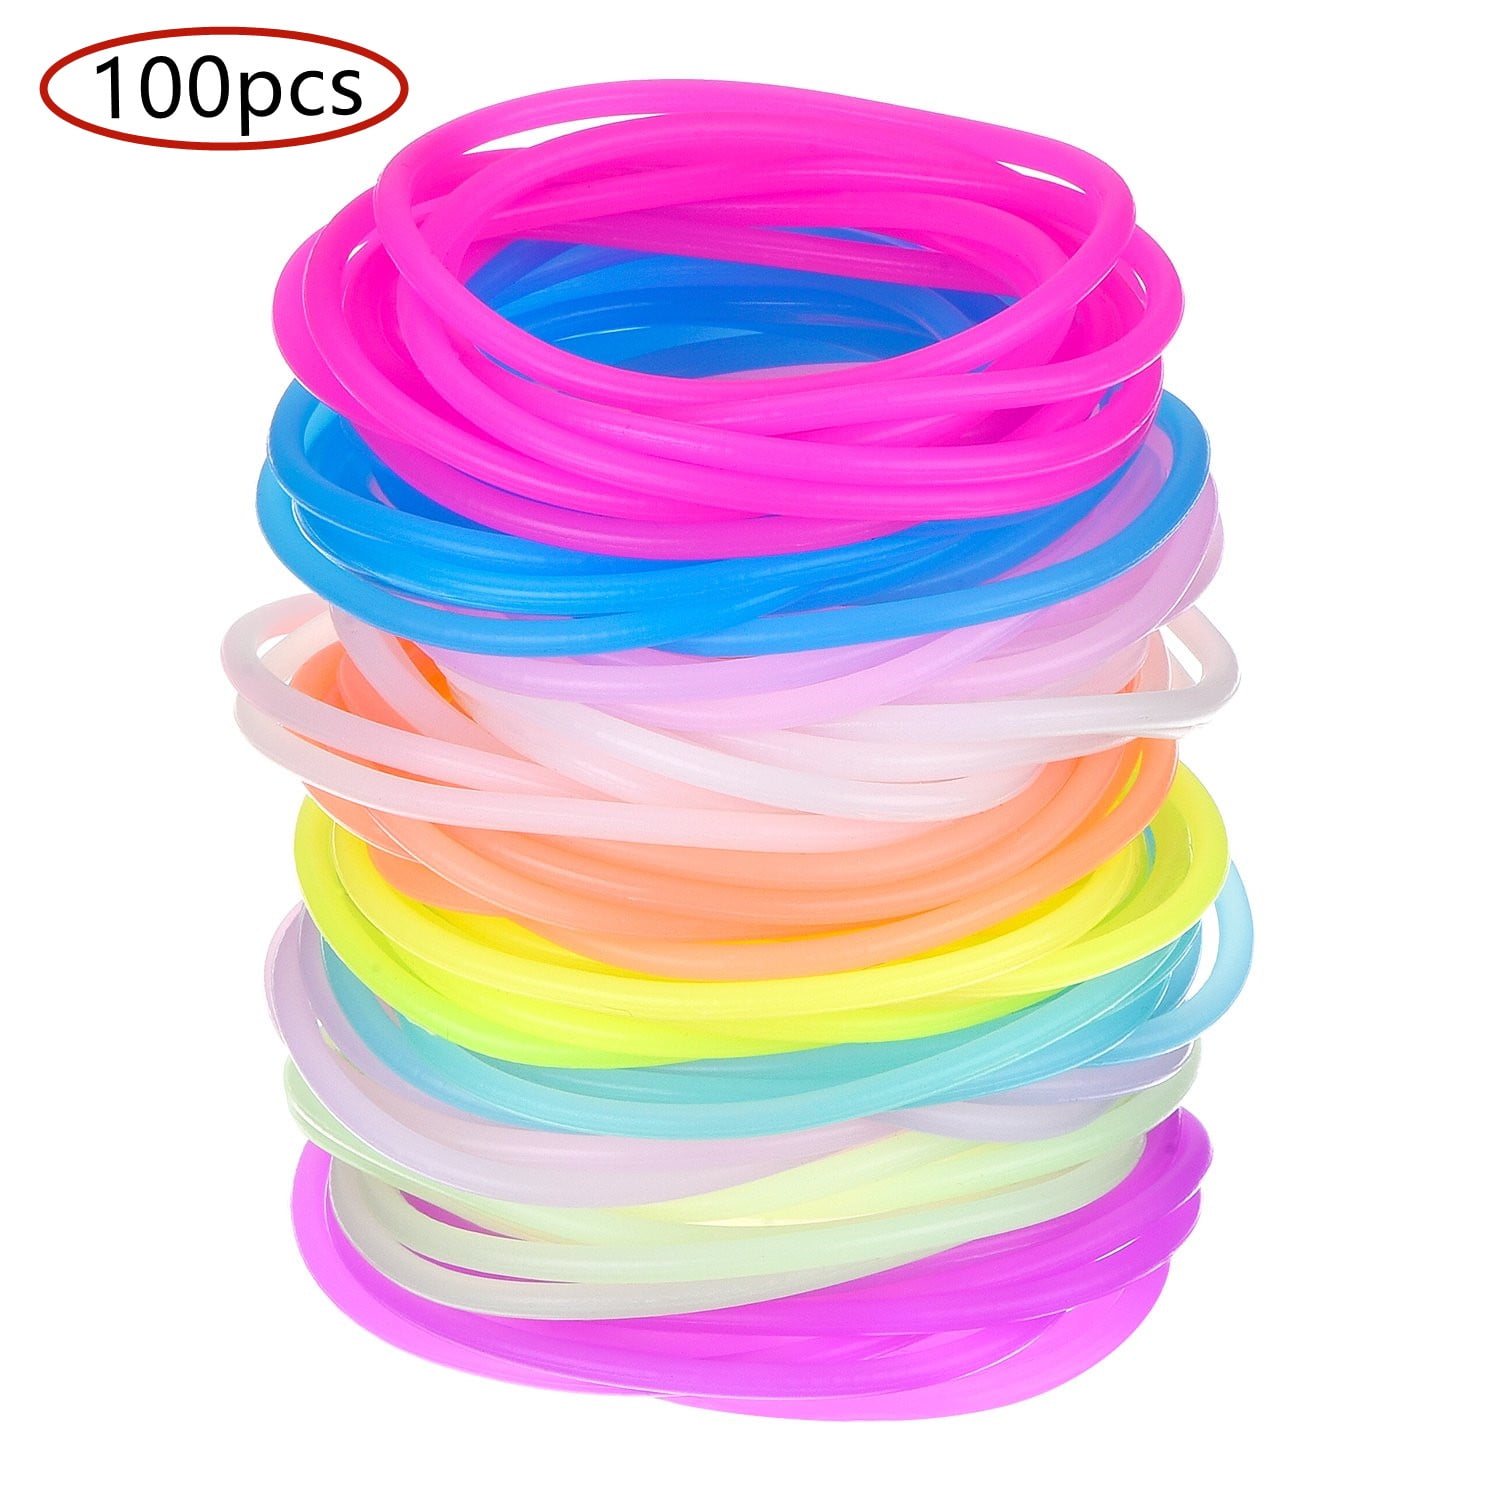 100 bracelets luminescents